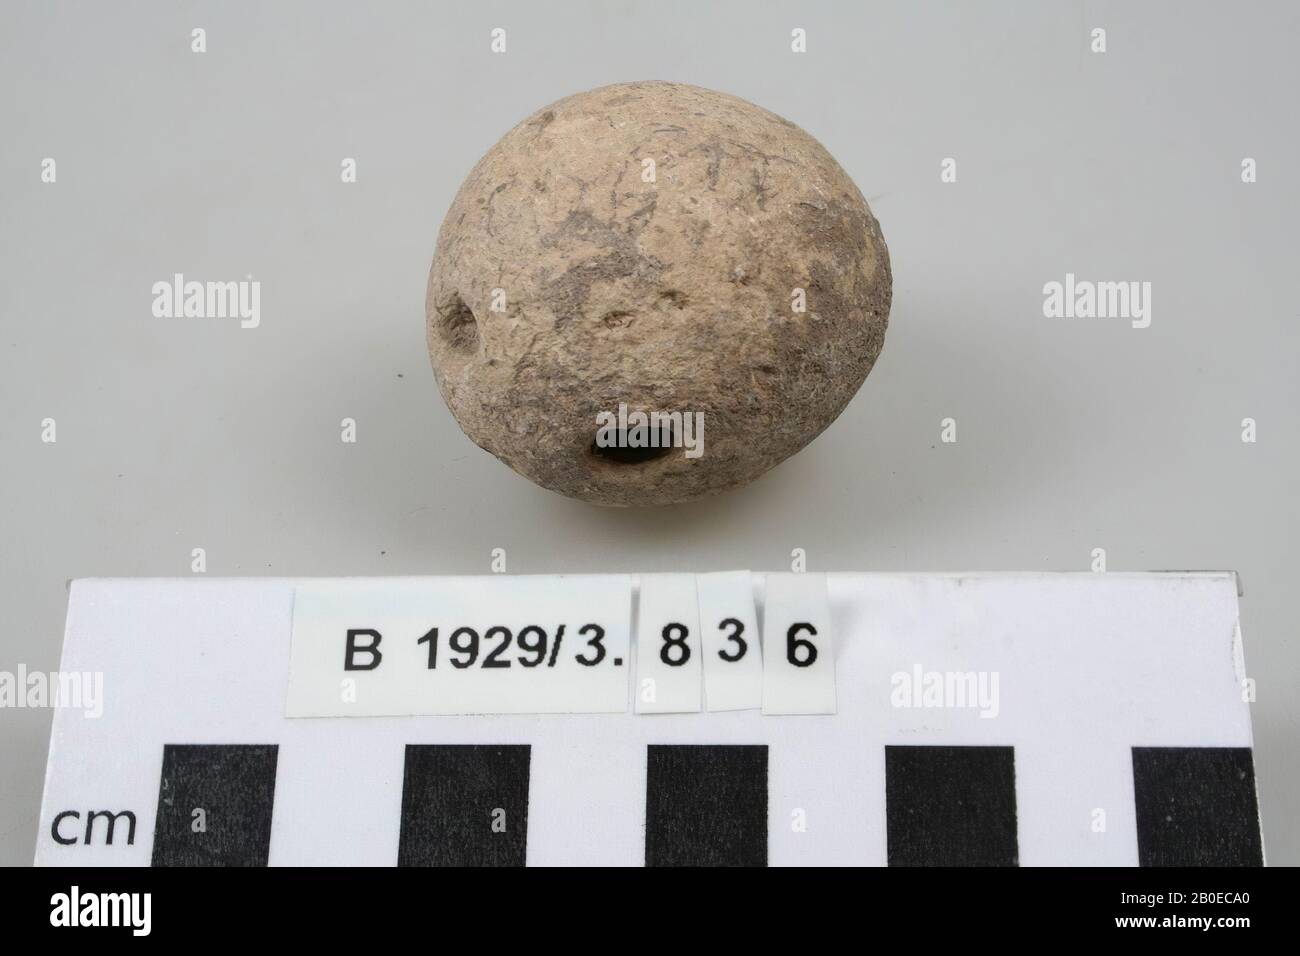 Ancient Near East, stone, stone, diam, 5 cm, Location, Israel Stock Photo